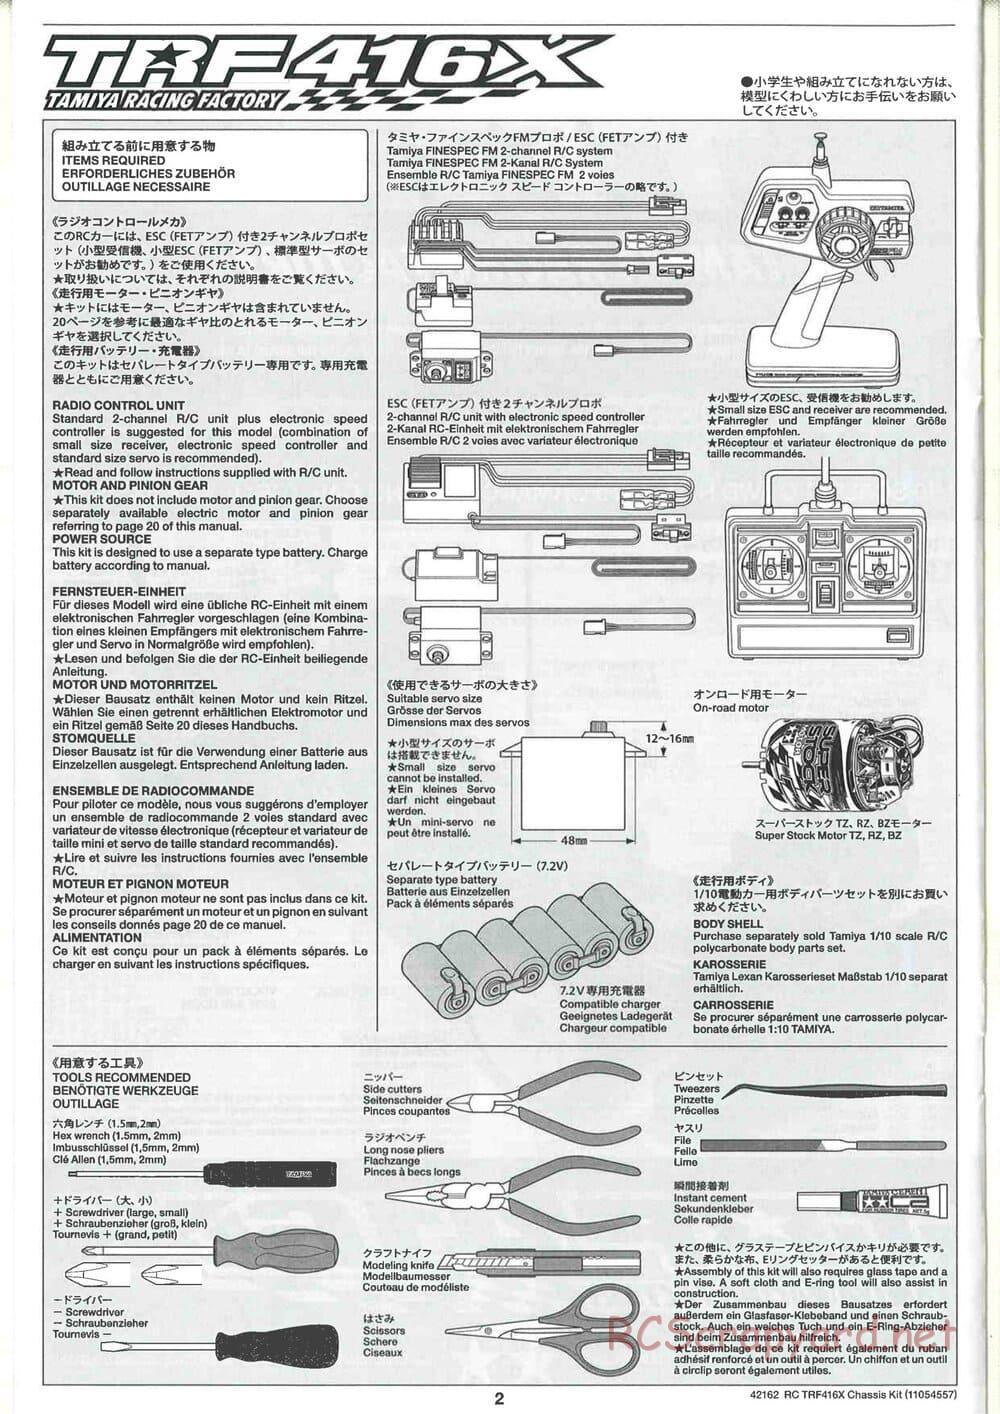 Tamiya - TRF416X Chassis - Manual - Page 2